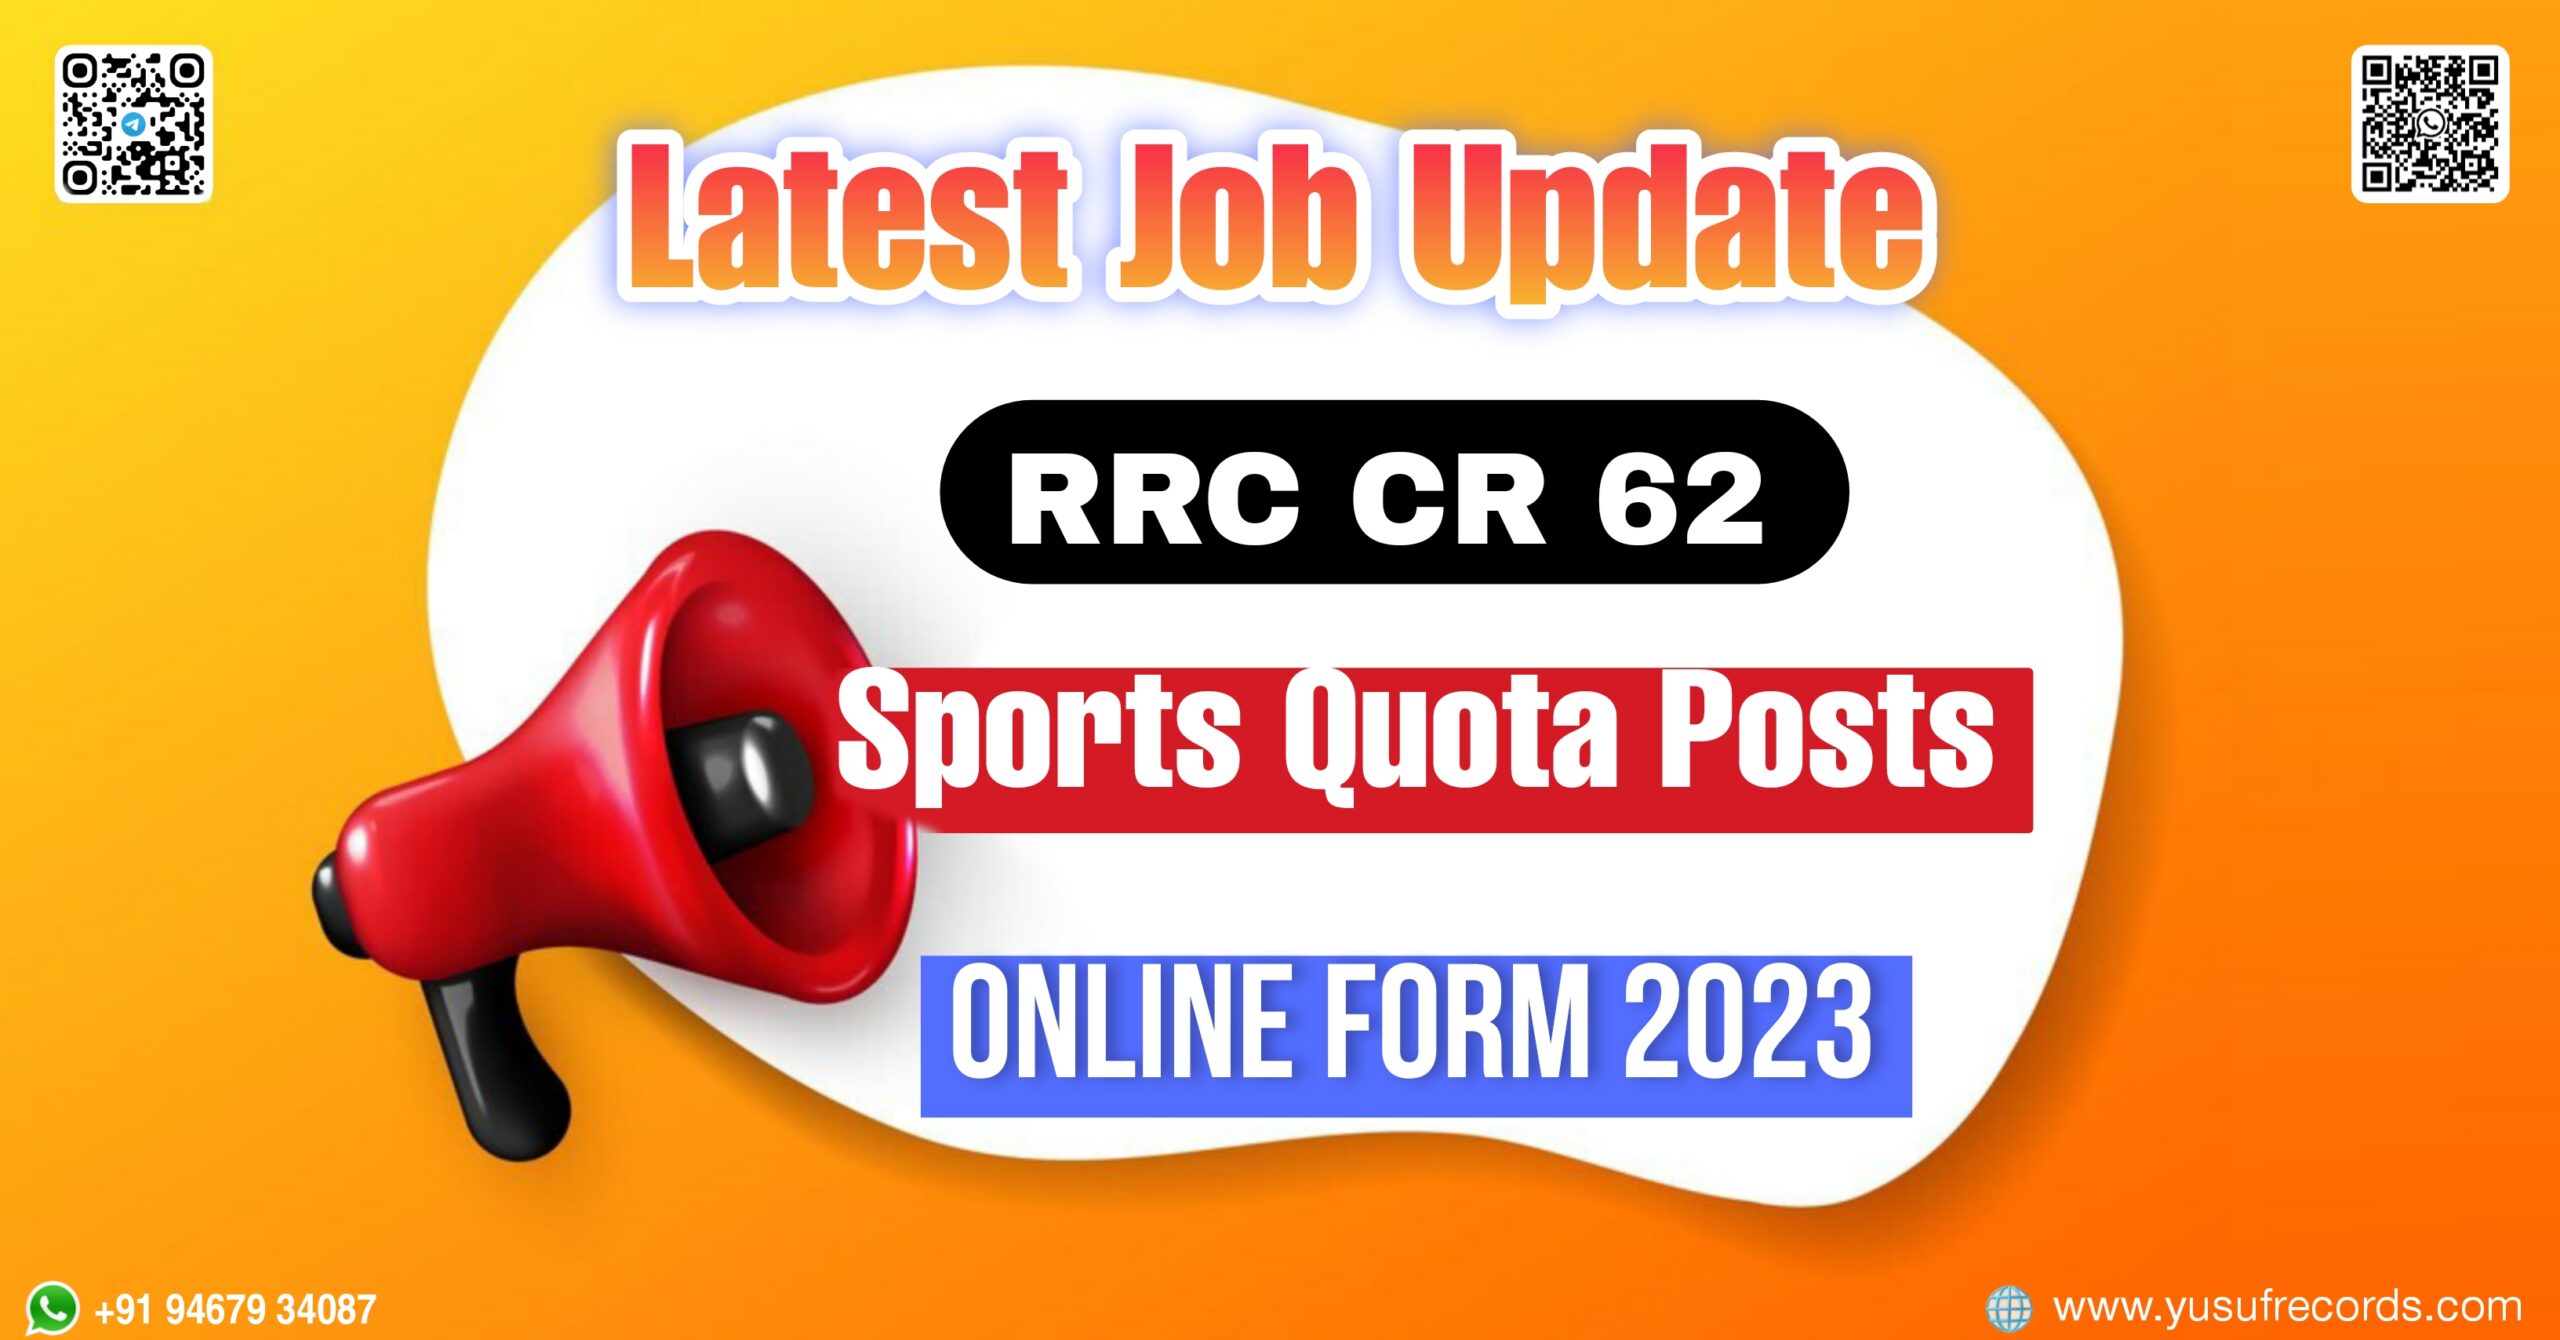 RRC CR 62 Sports Quota Posts Online Form 2023 YUSUFRECORDS